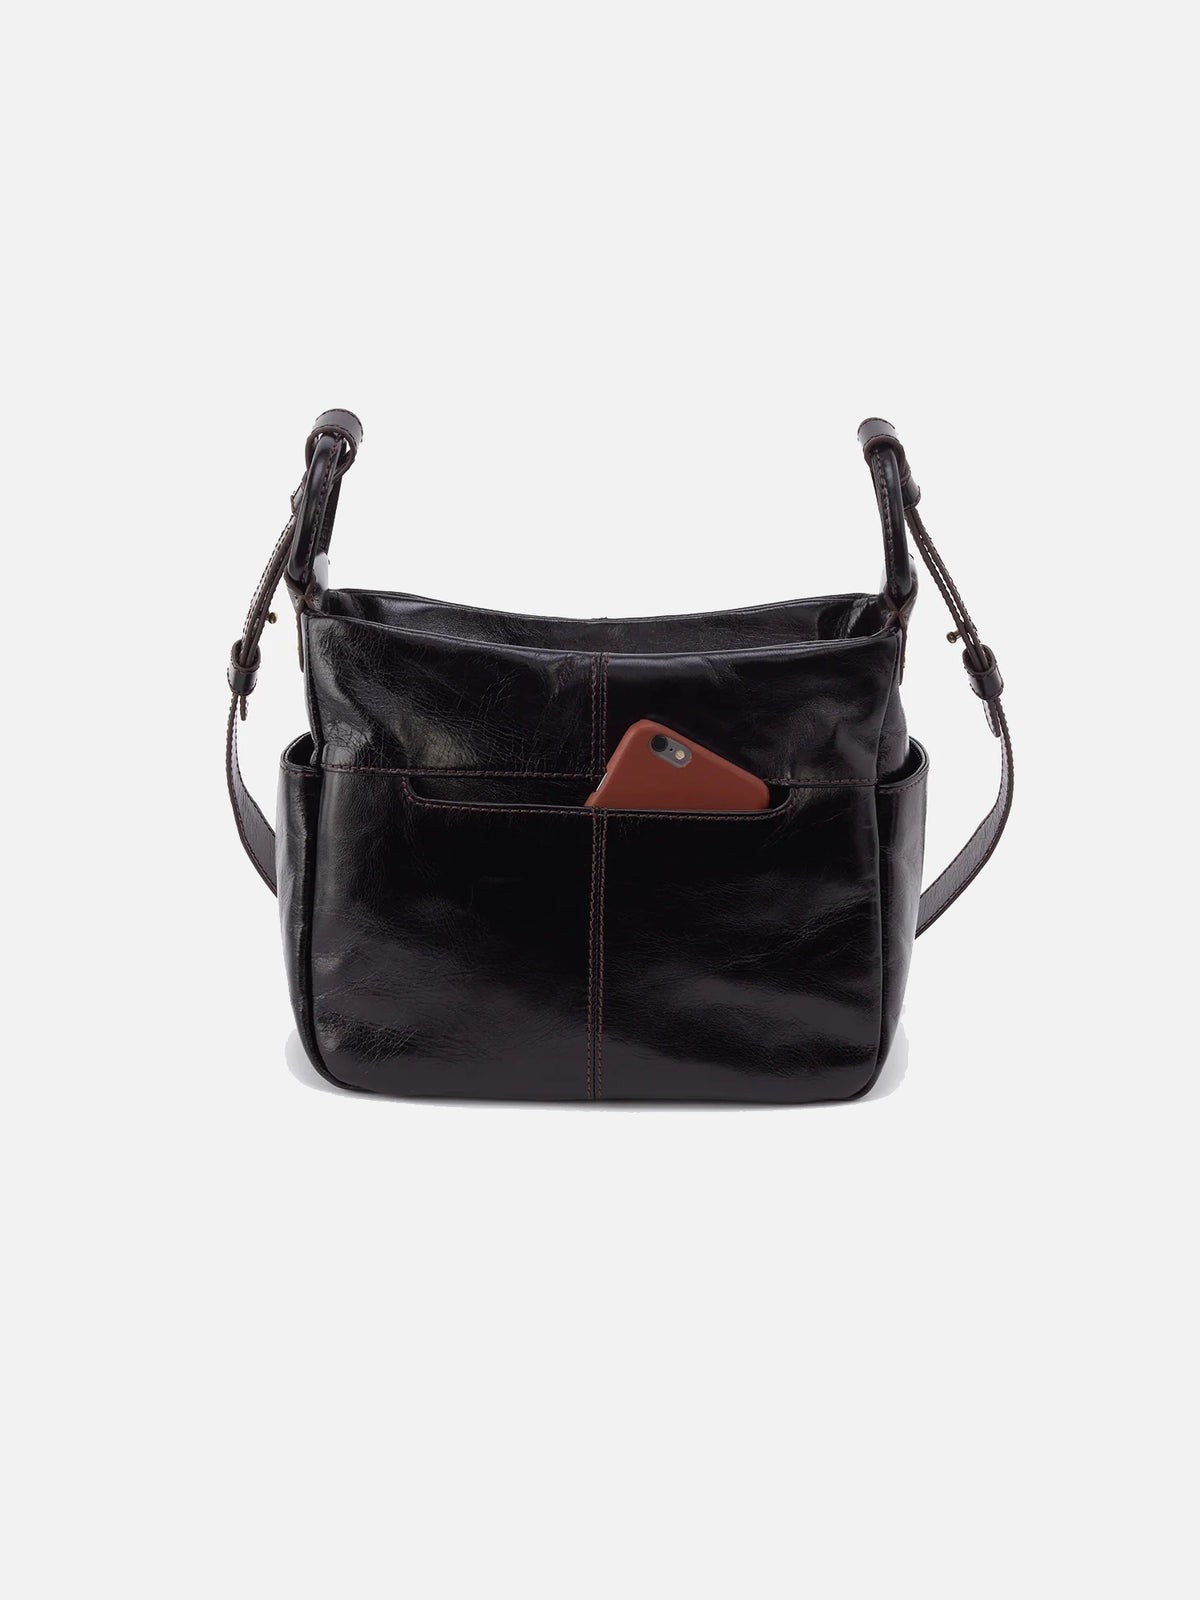 hobo sheila crossbody bag in black polished leather